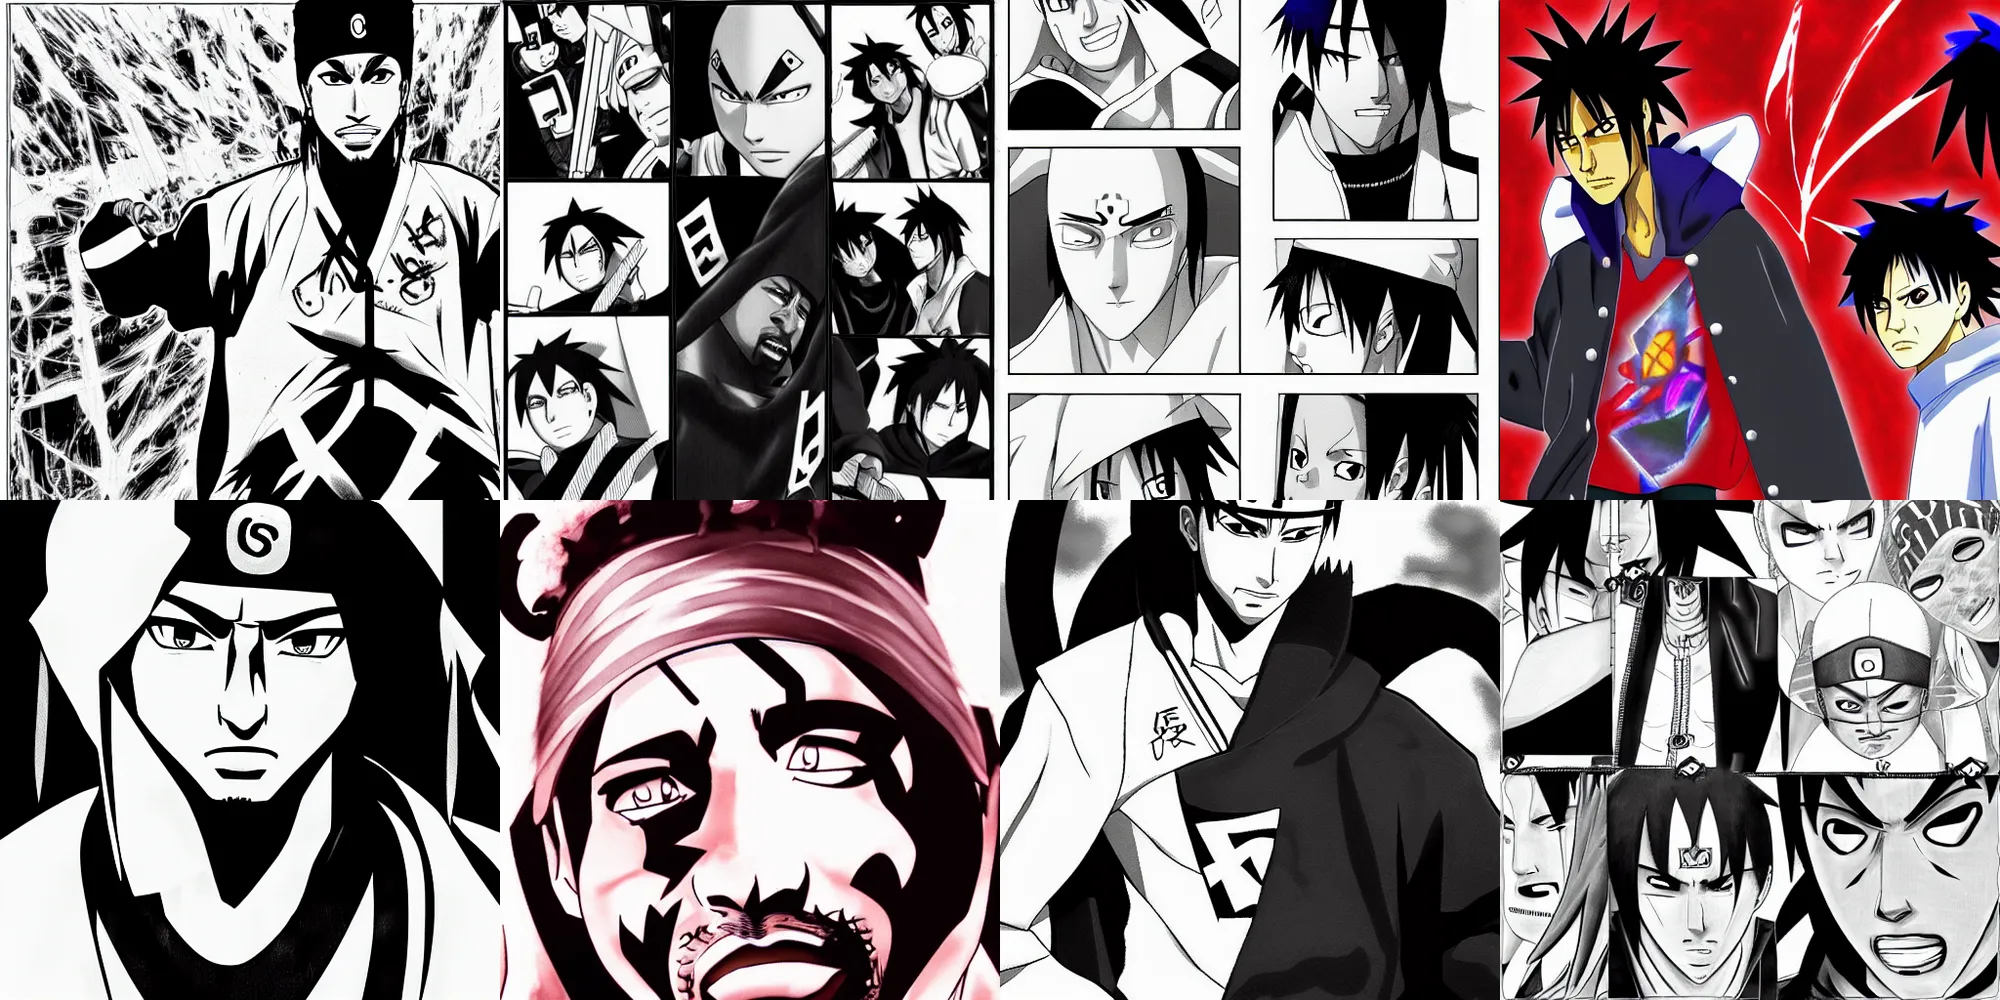 Prompt: Tupac joins the Akatsuki with Sasuke 4 manga panels on page 8k black and white Kishimoto art style ArtStation